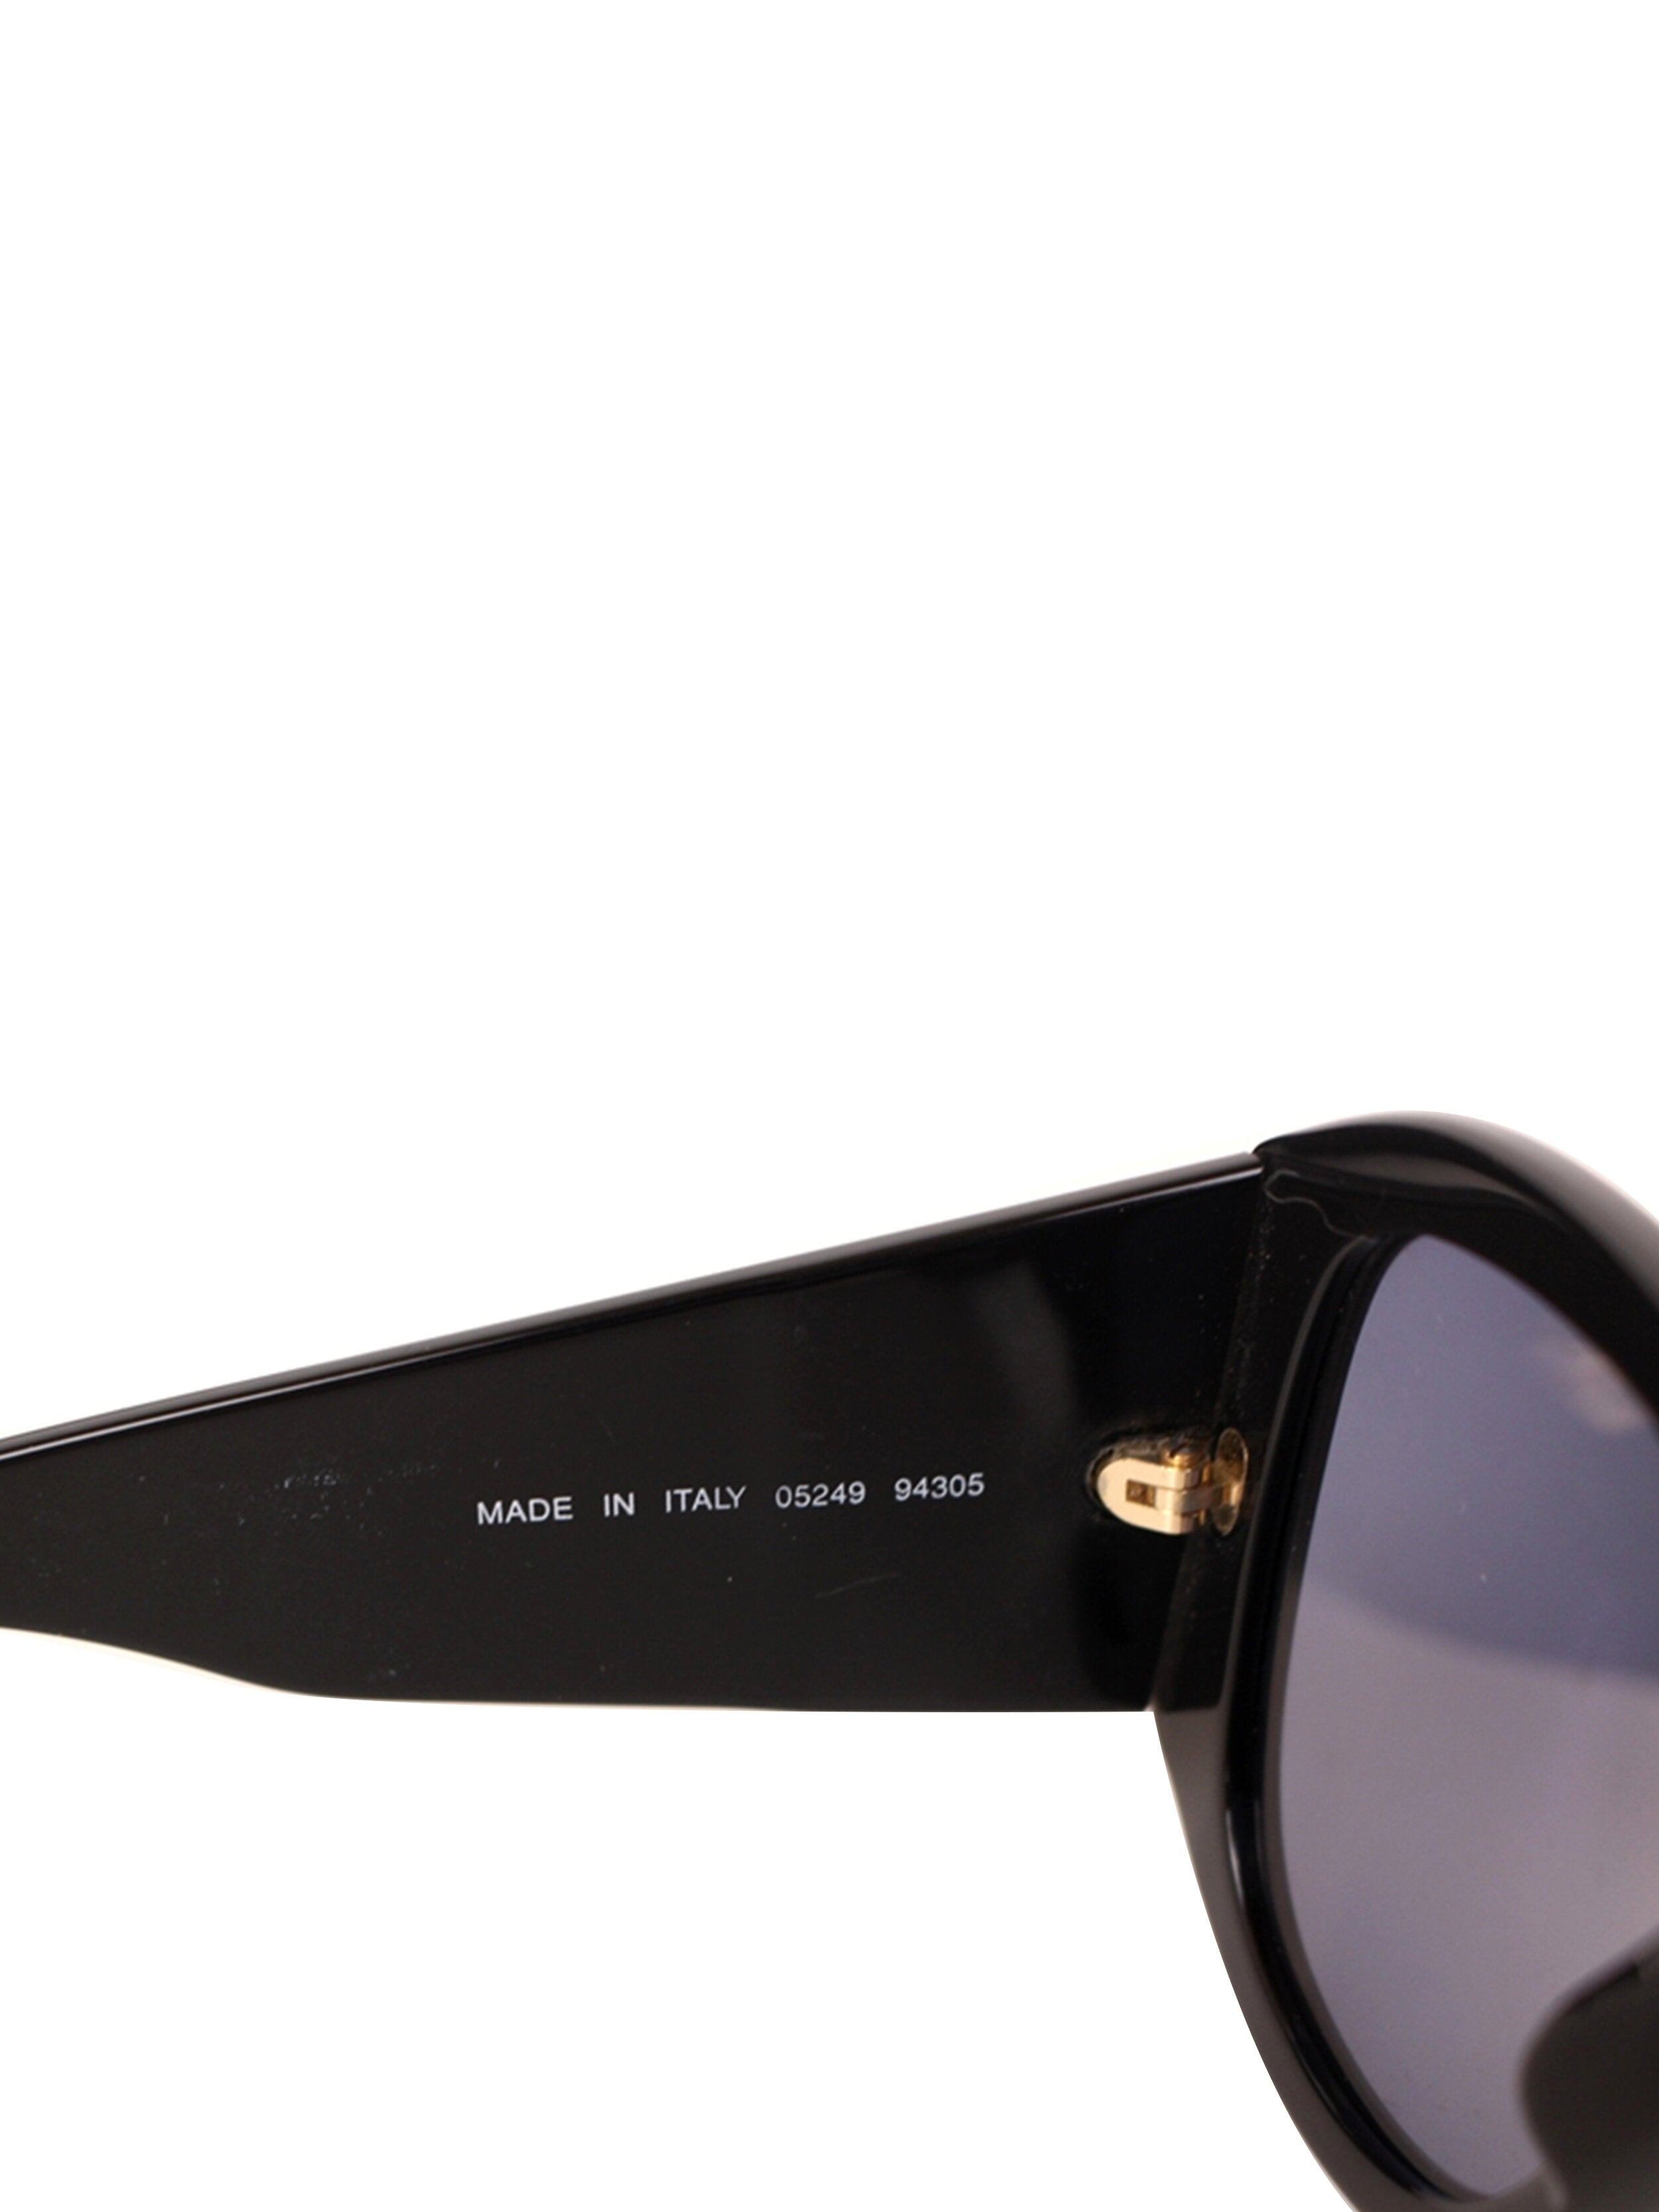 Chanel 90s sunglasses - Gem